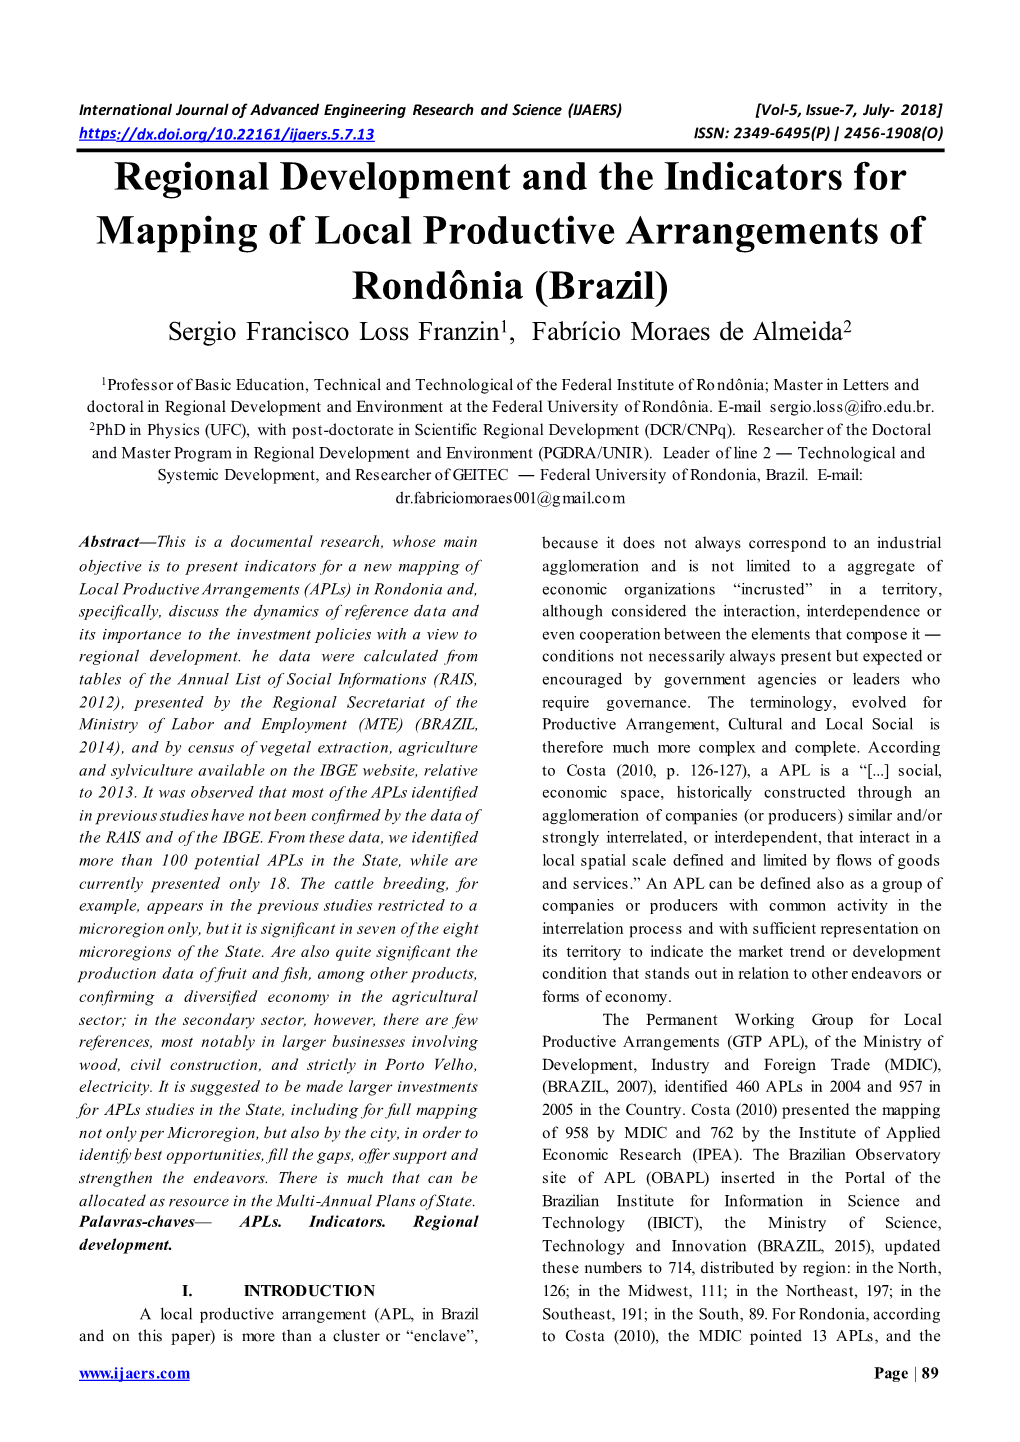 Regional Development and the Indicators for Mapping of Local Productive Arrangements of Rondônia (Brazil) Sergio Francisco Loss Franzin1, Fabrício Moraes De Almeida2